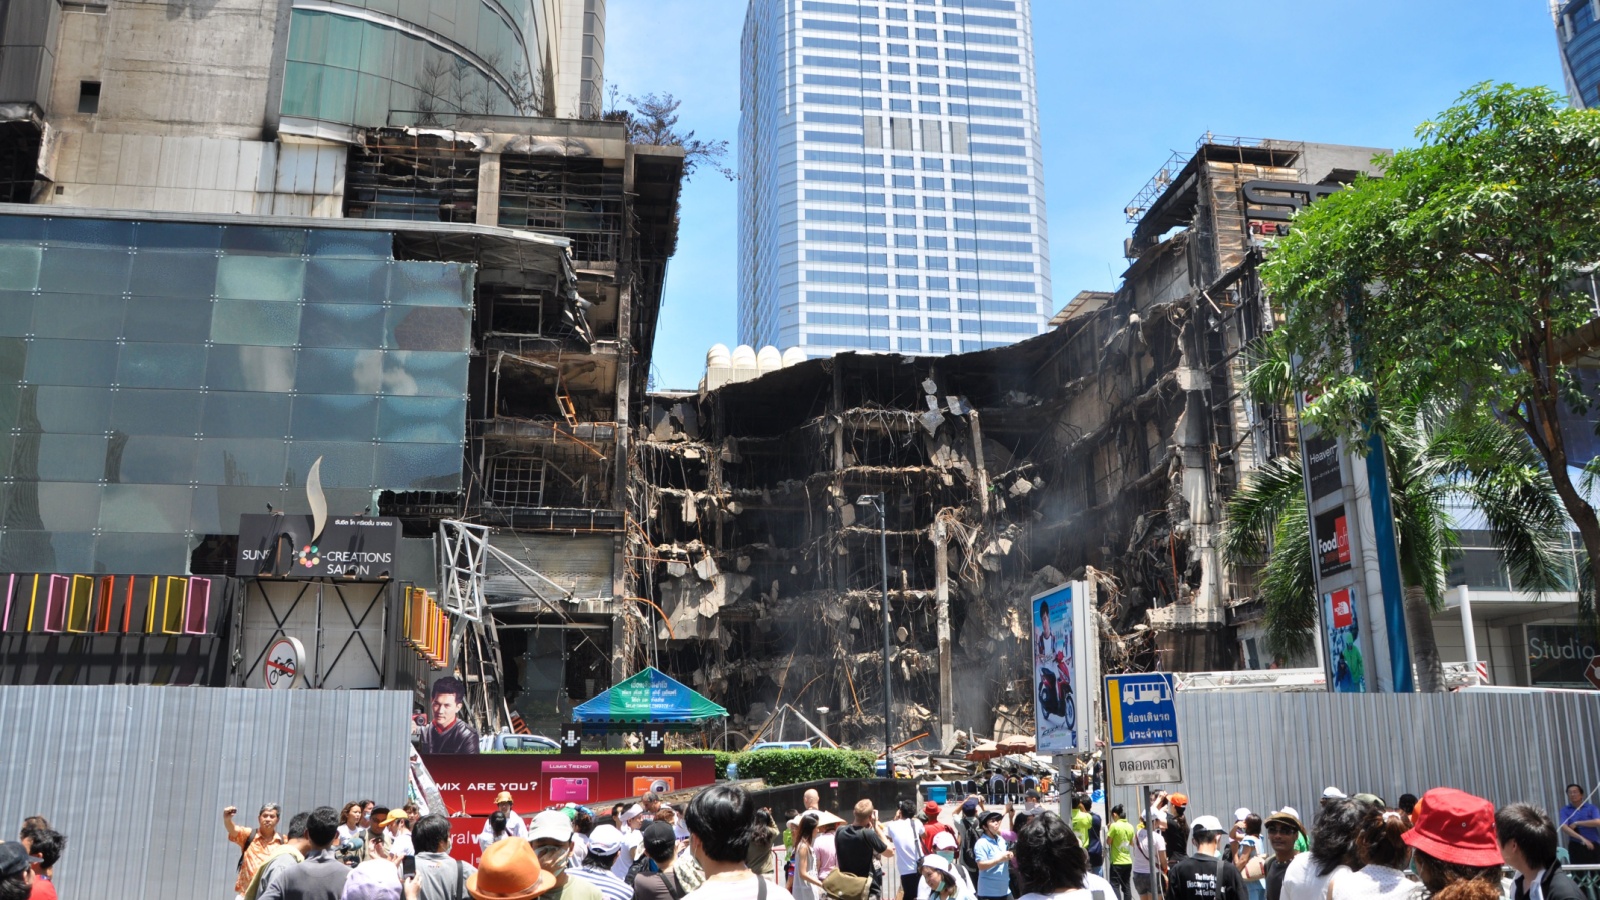 Central world was damaged during political turmoil in Bangkok